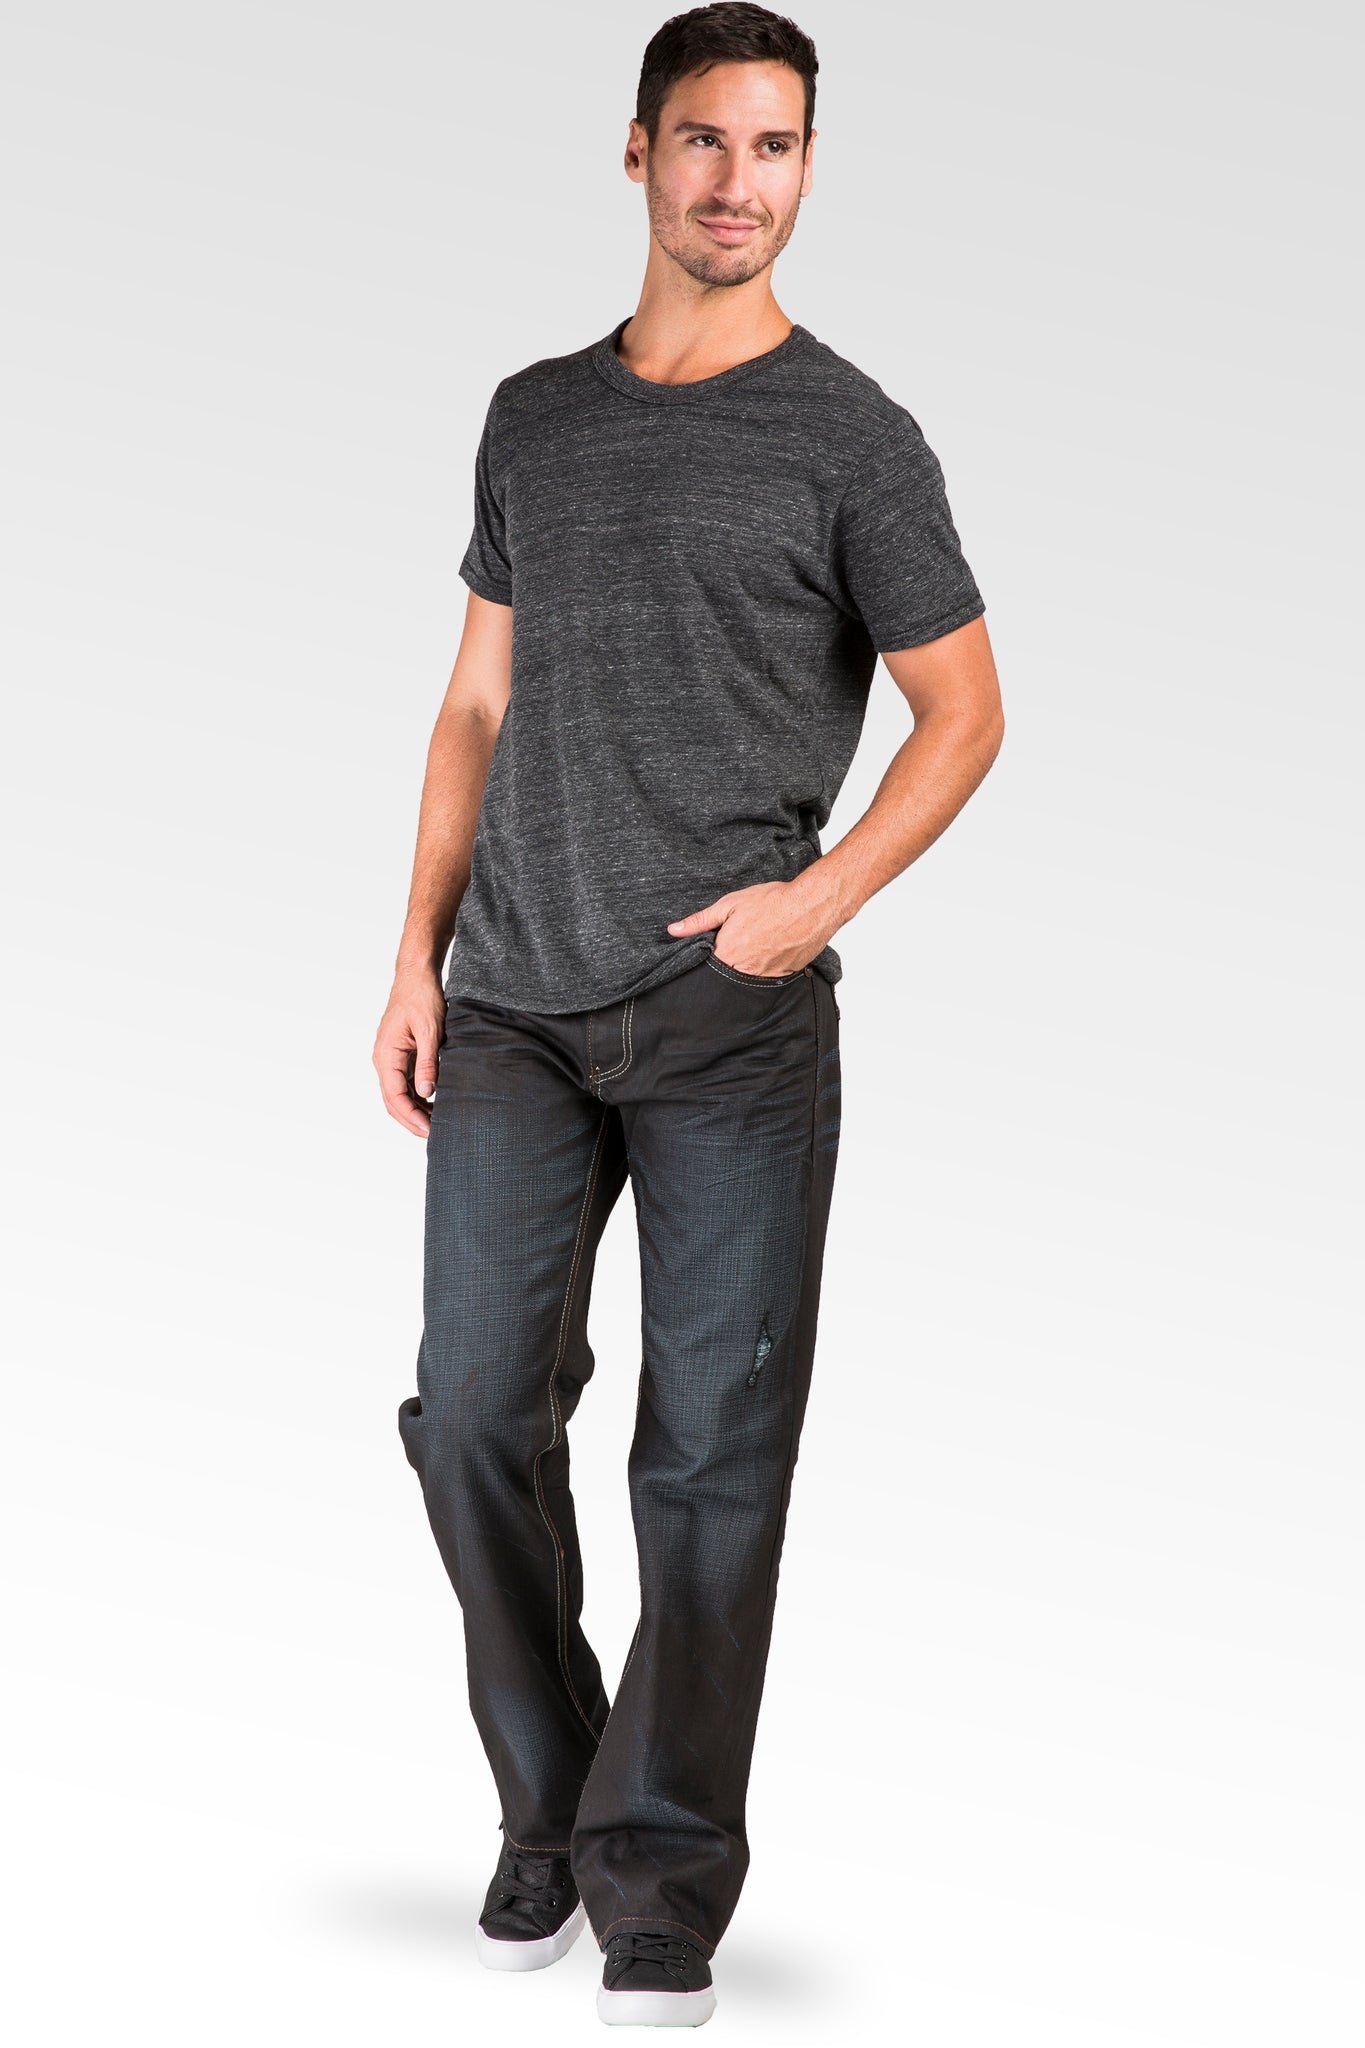 Men's Relaxed Bootcut Black Premium Denim 5 Pocket Jeans Black Overspray Coating